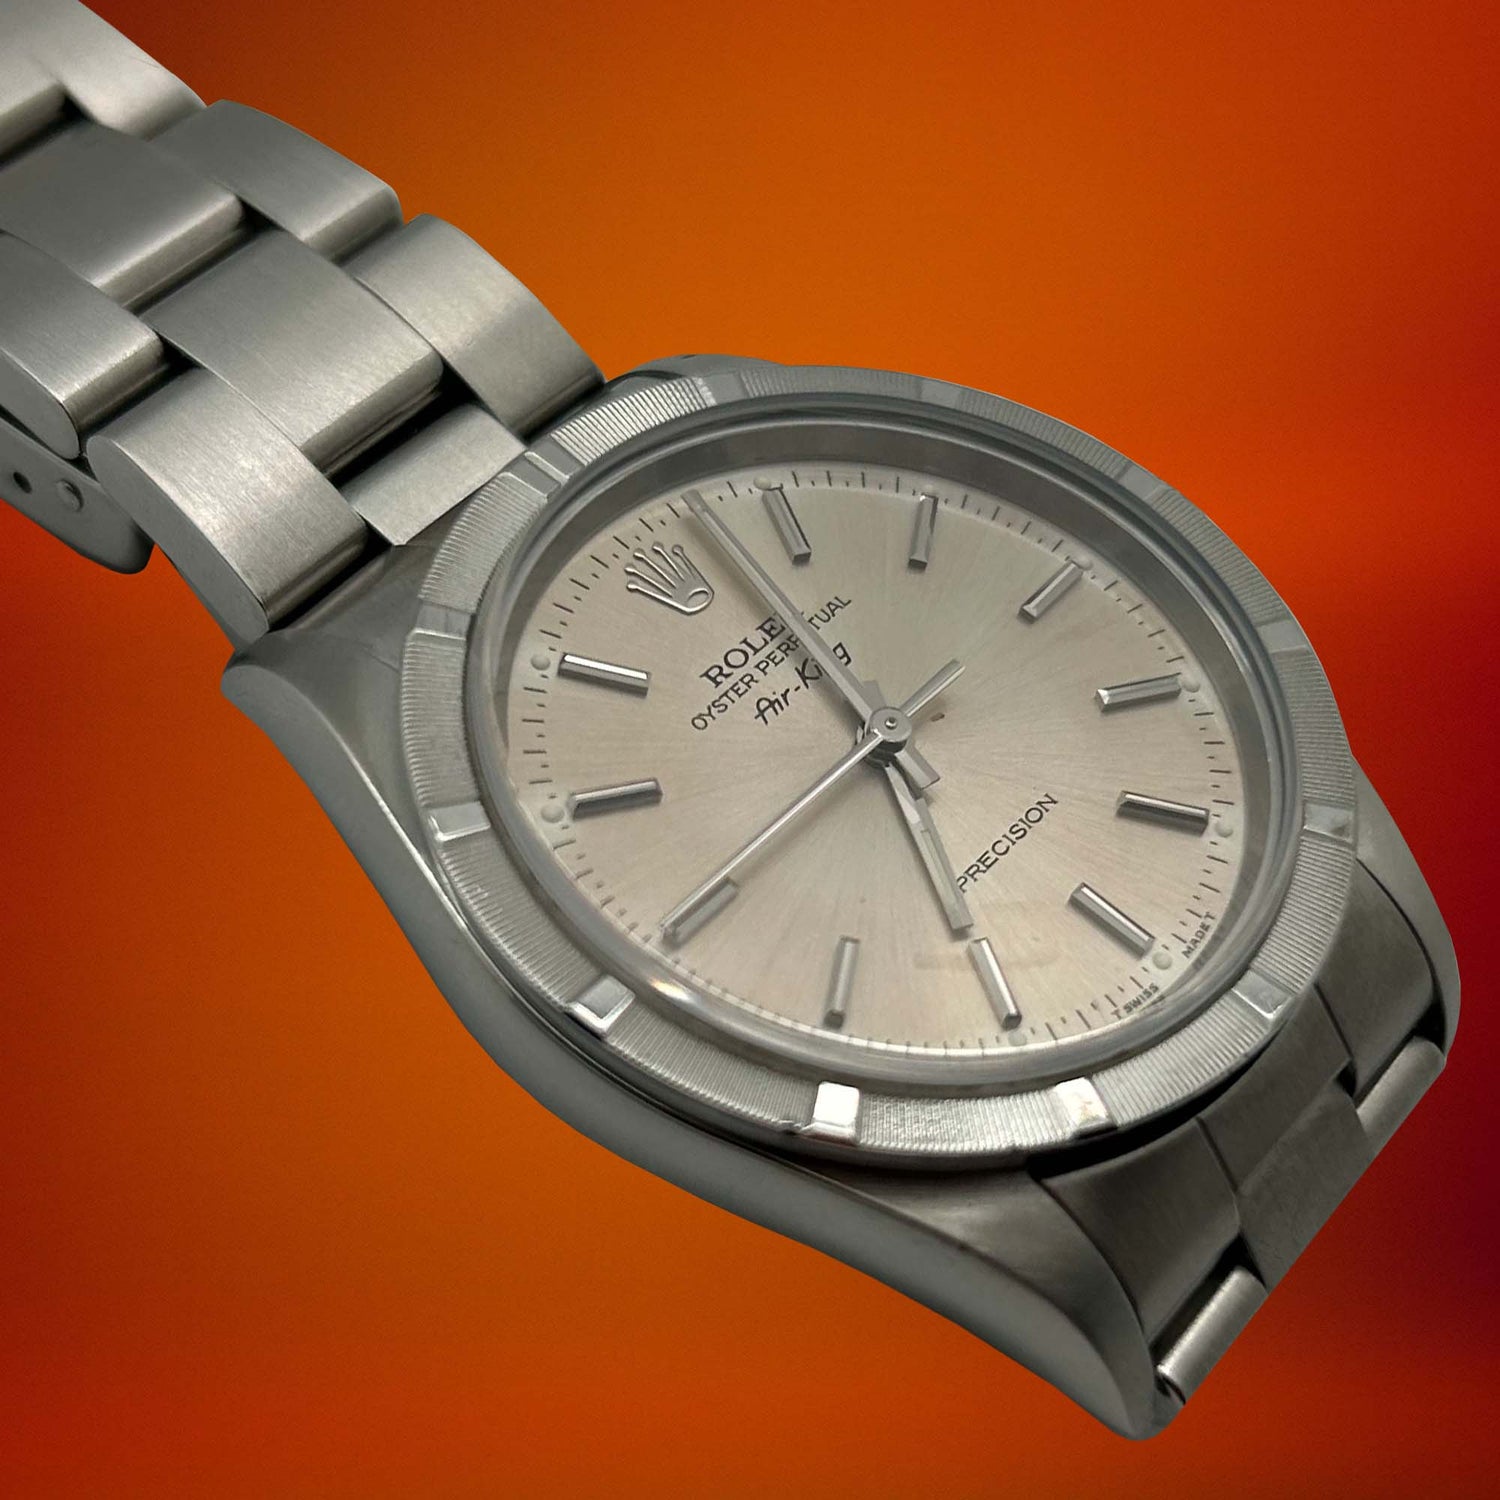 1997 Rolex Air King Wrist Watch Front